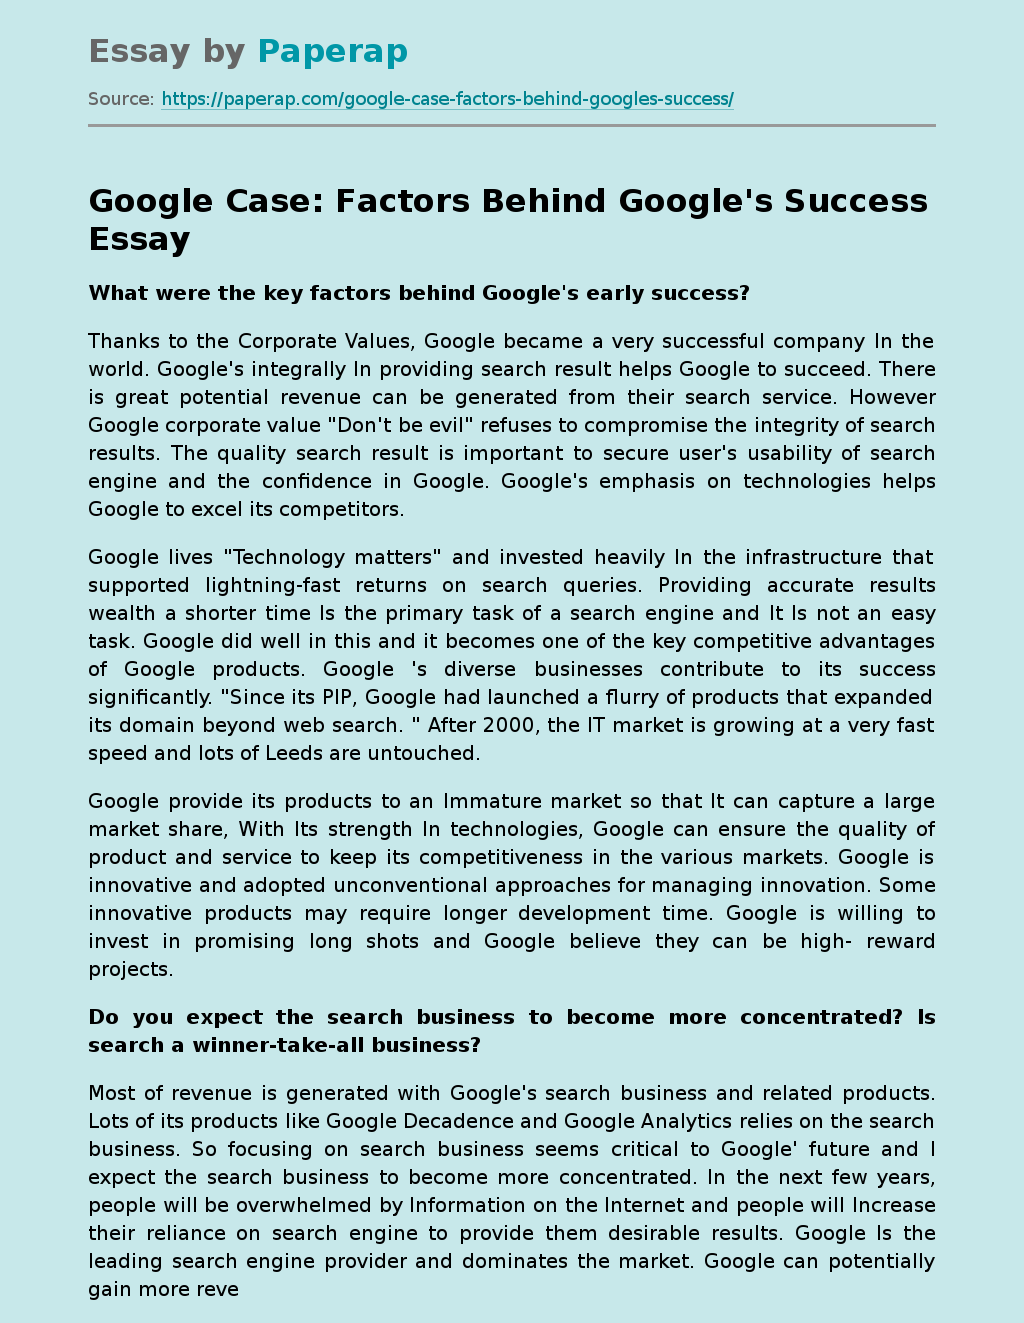 Google Case: Factors Behind Google's Success